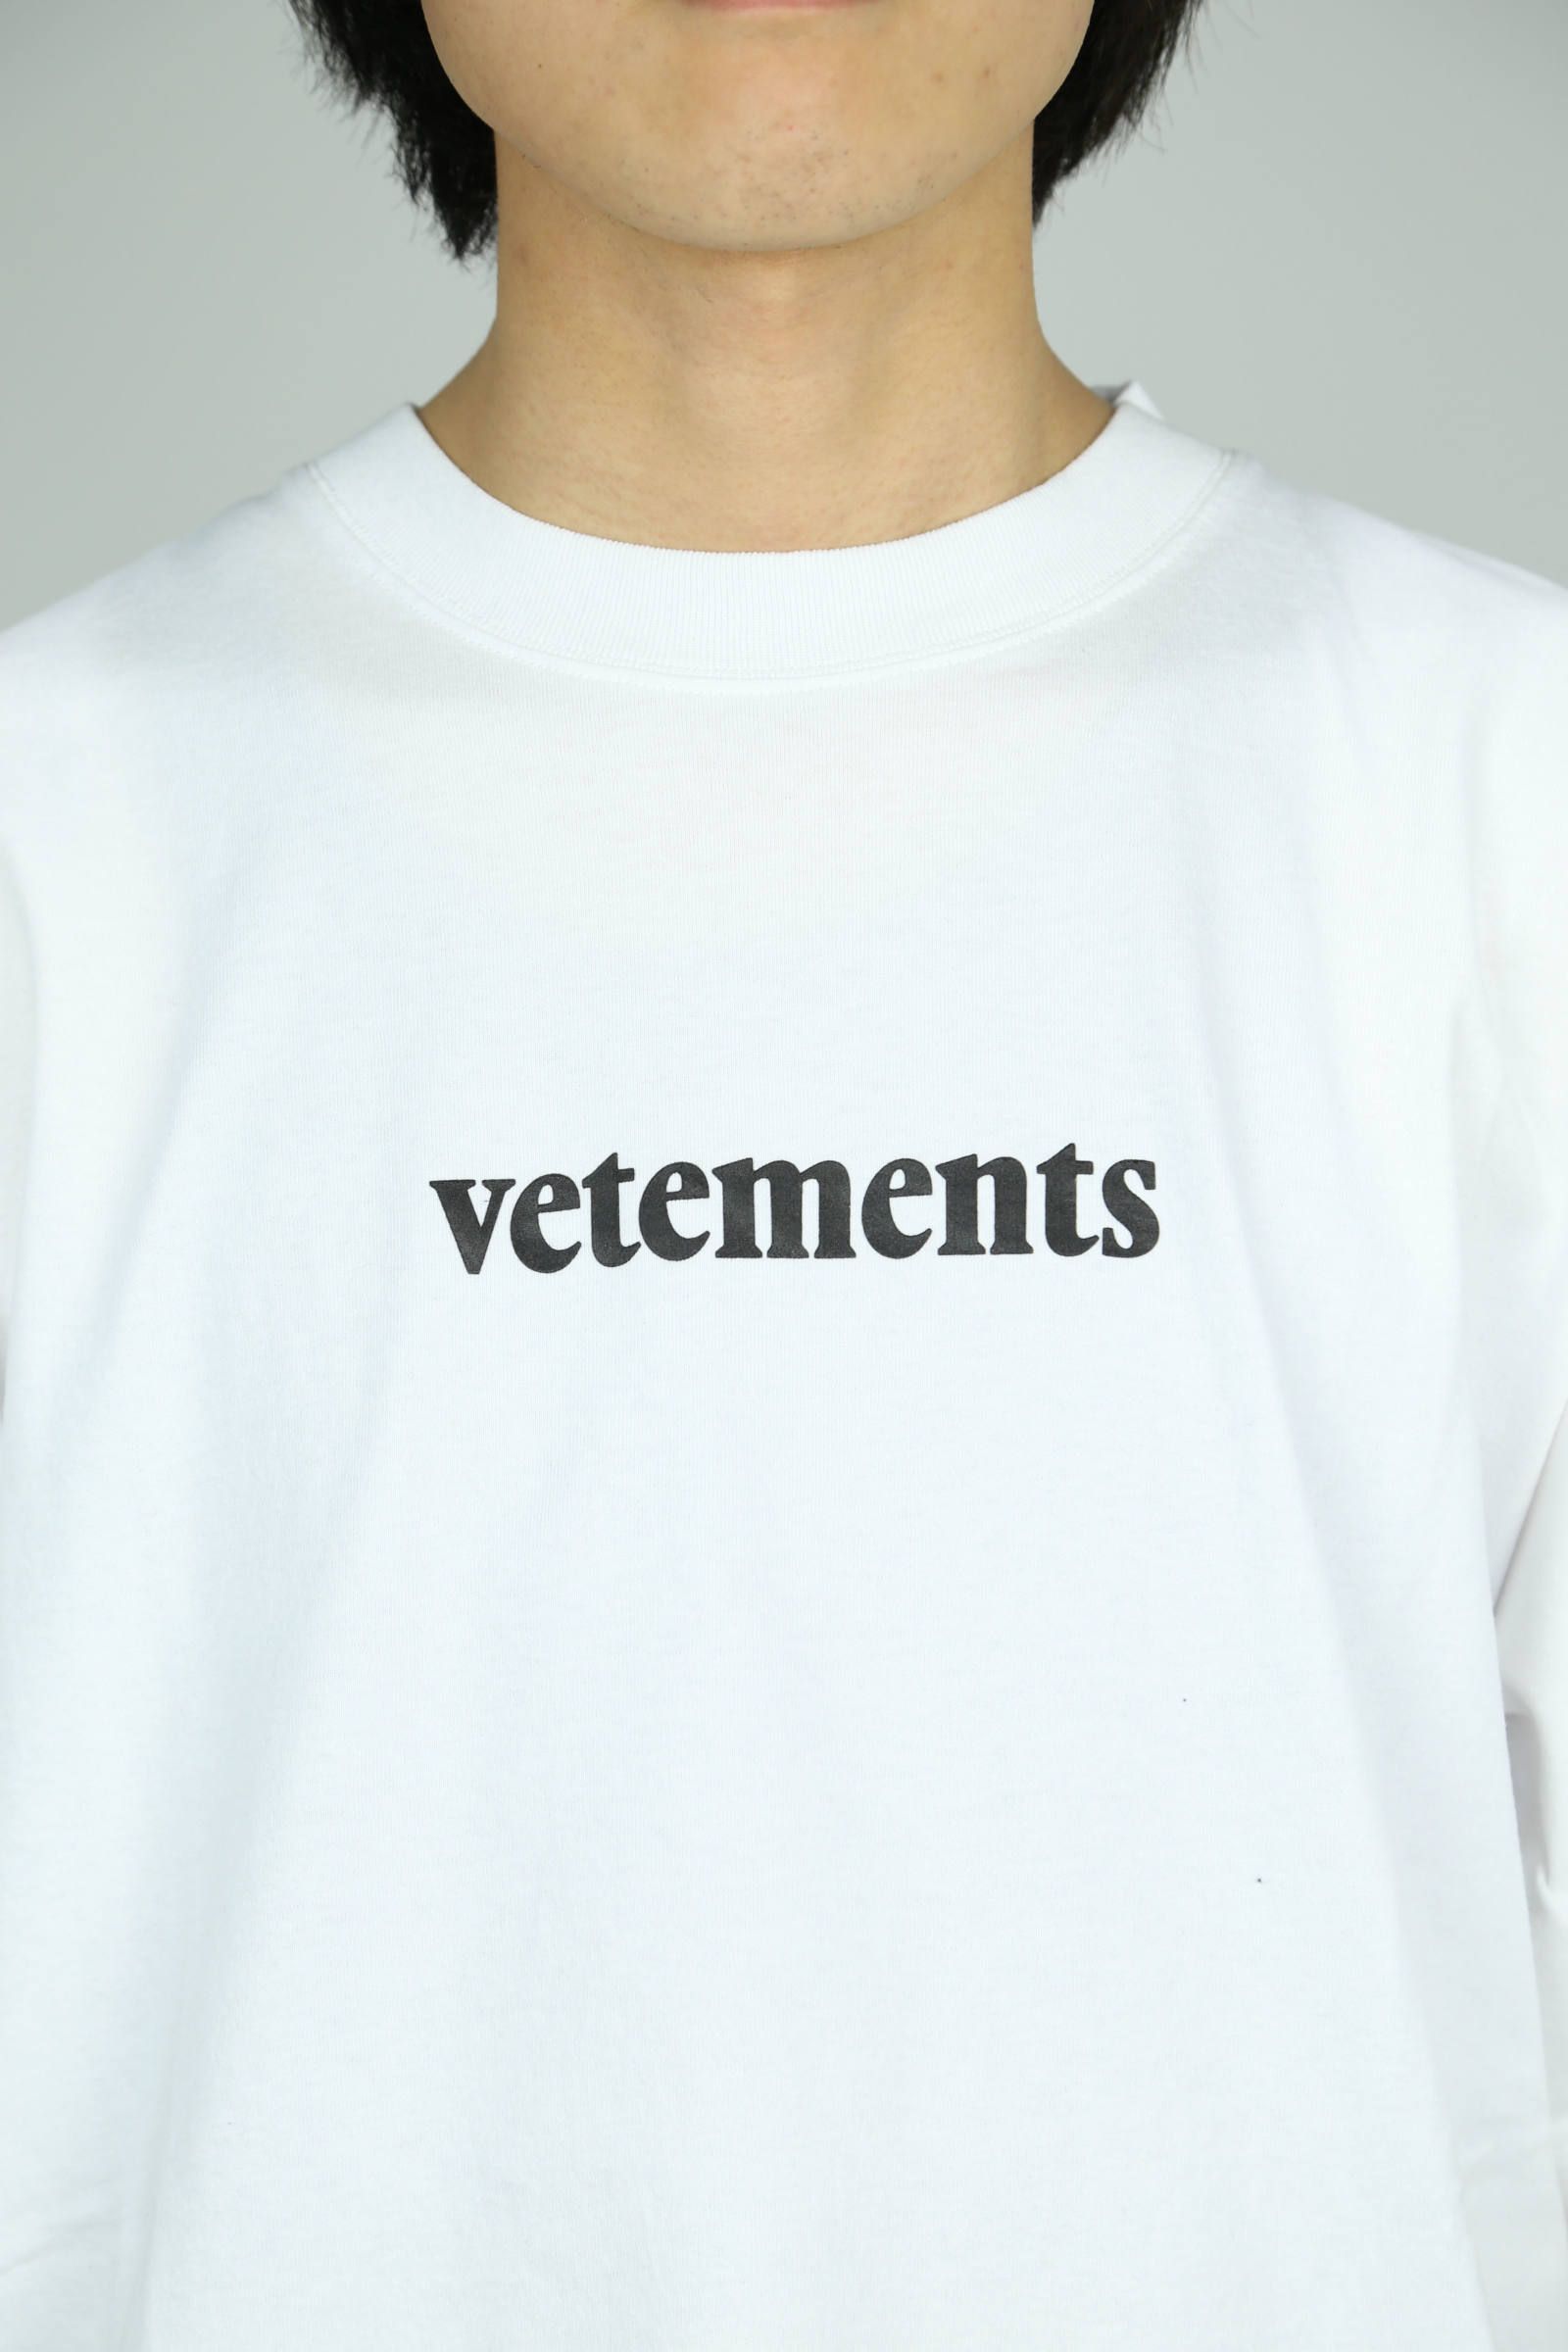 VETEMENTS 2019 Tシャツ